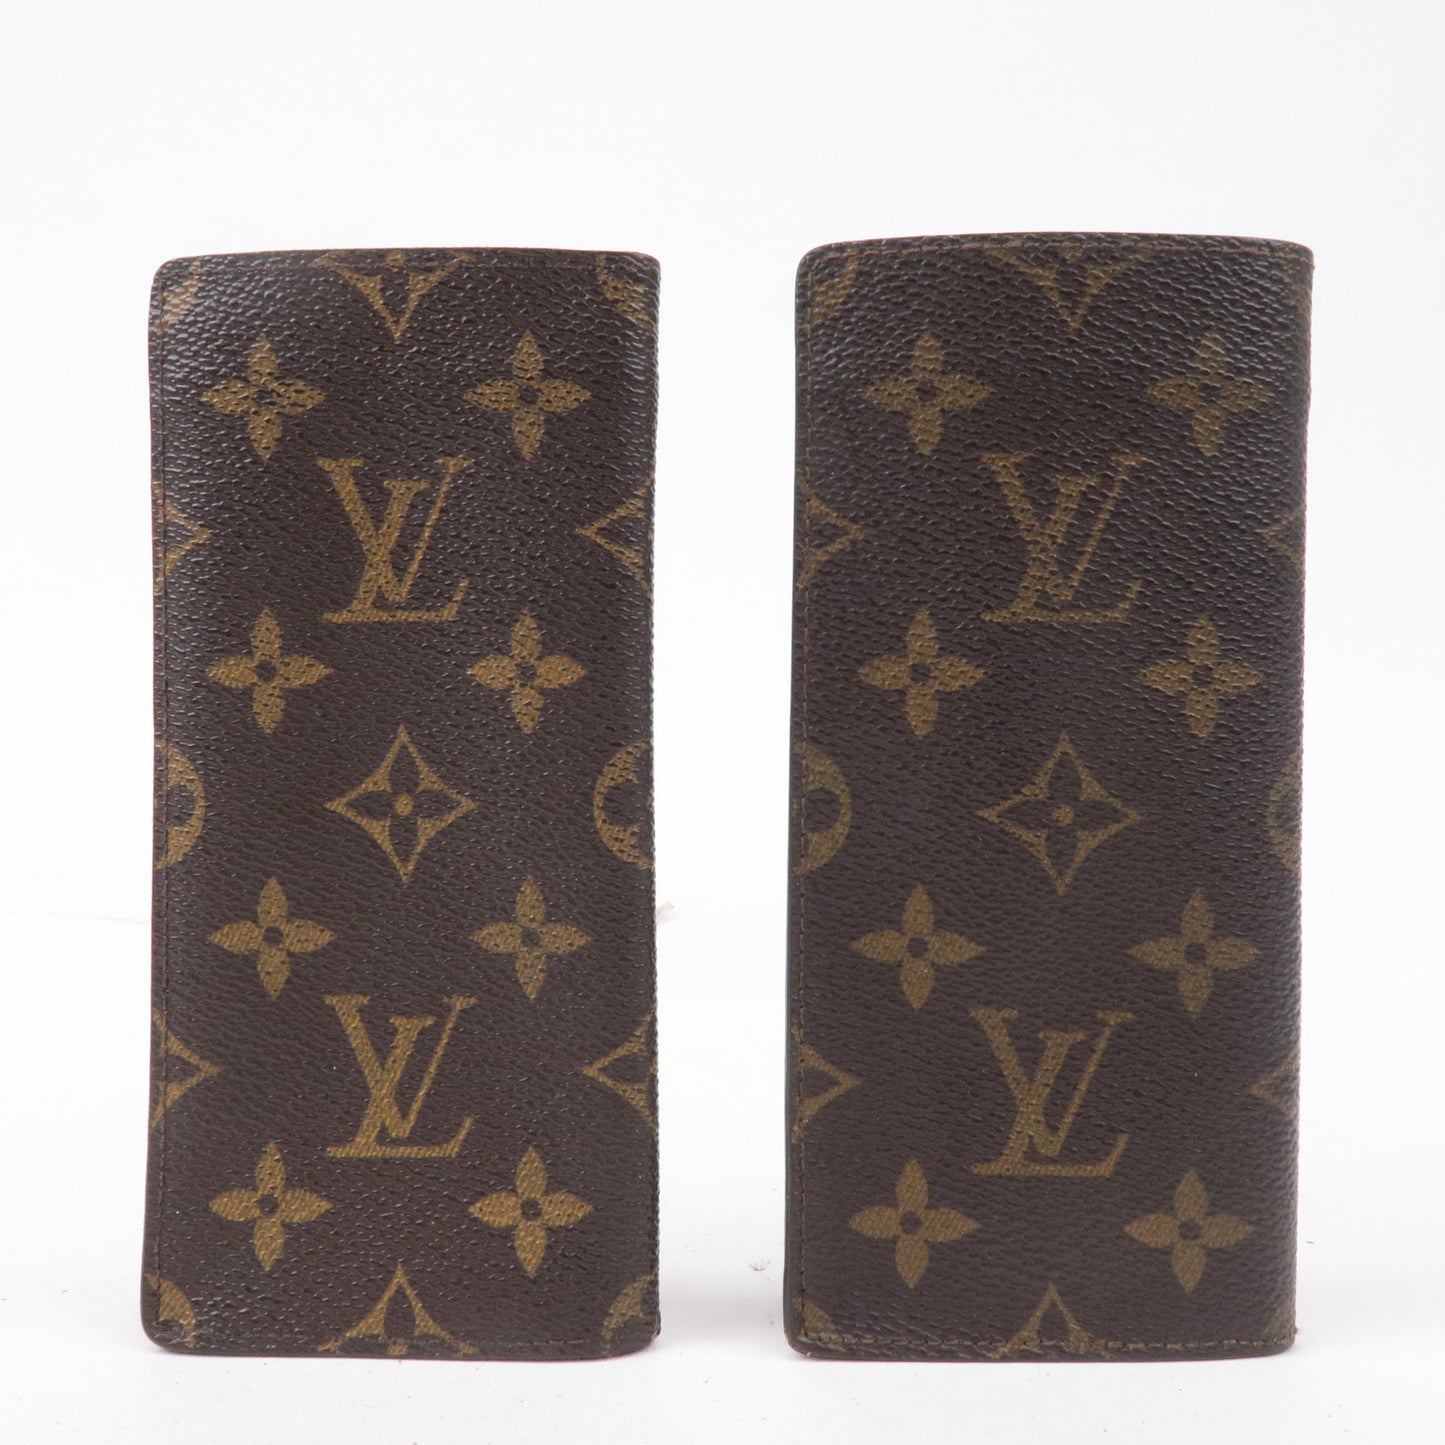 Authentic Louis Vuitton Monogram Set of 2 Glasses Case M62970